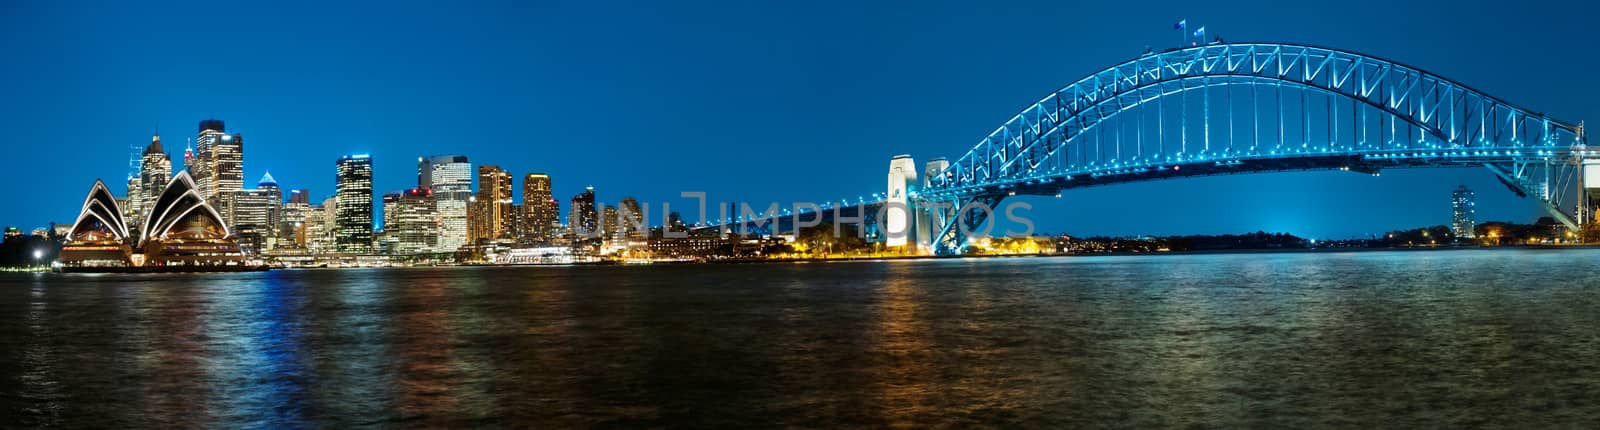 Sydney by fyletto